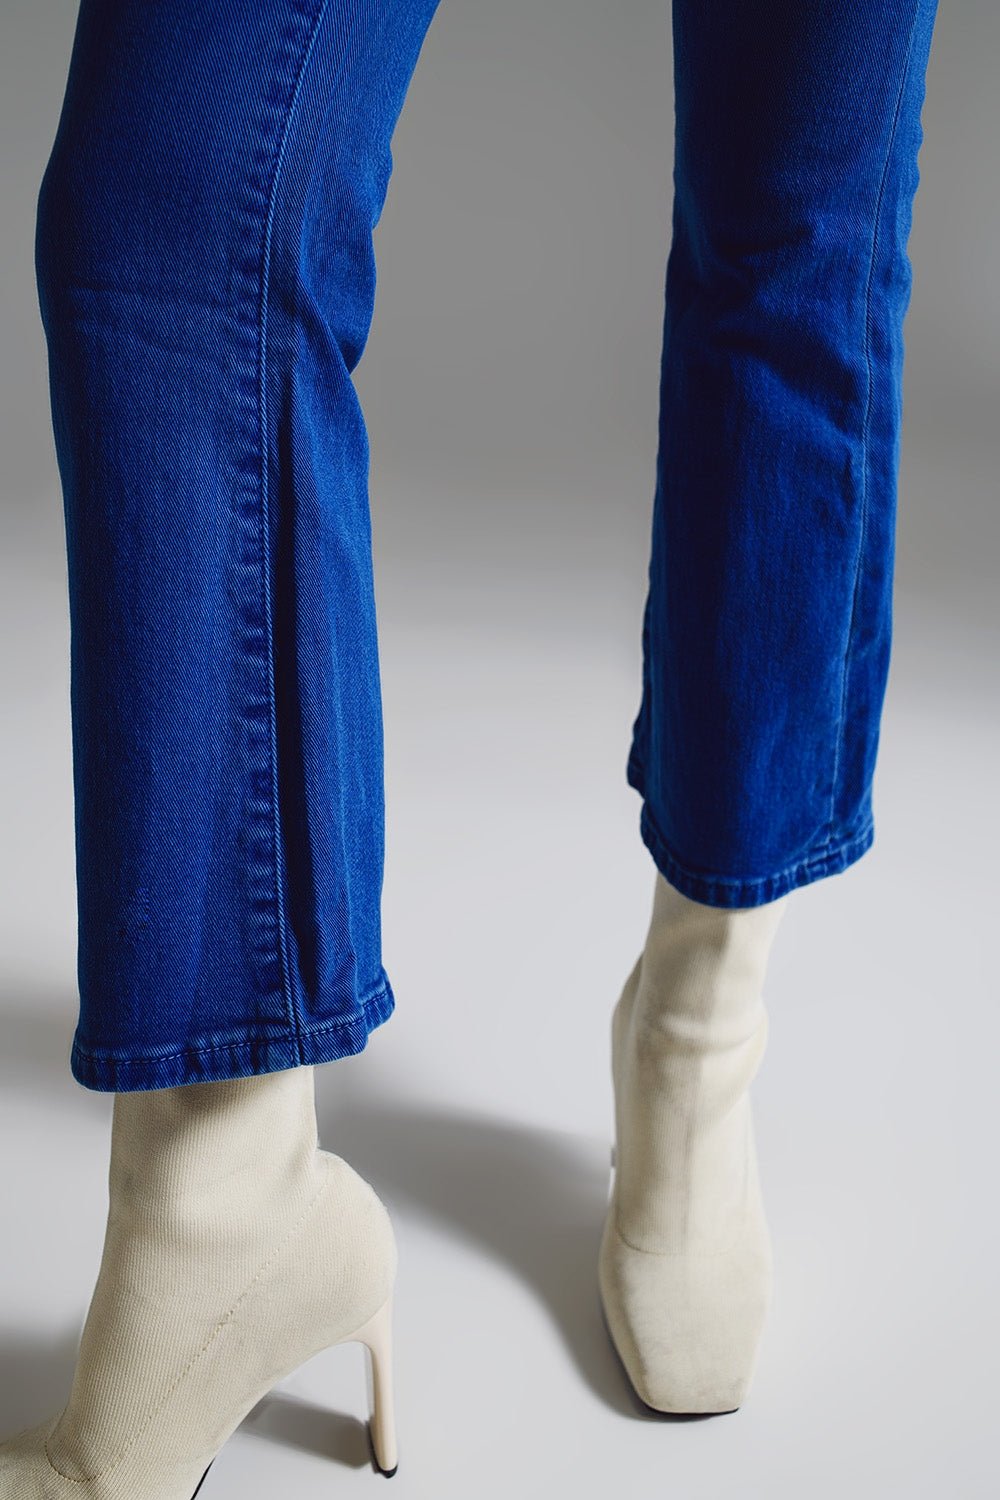 High Waist Flair Jeans in Blue - Mack & Harvie